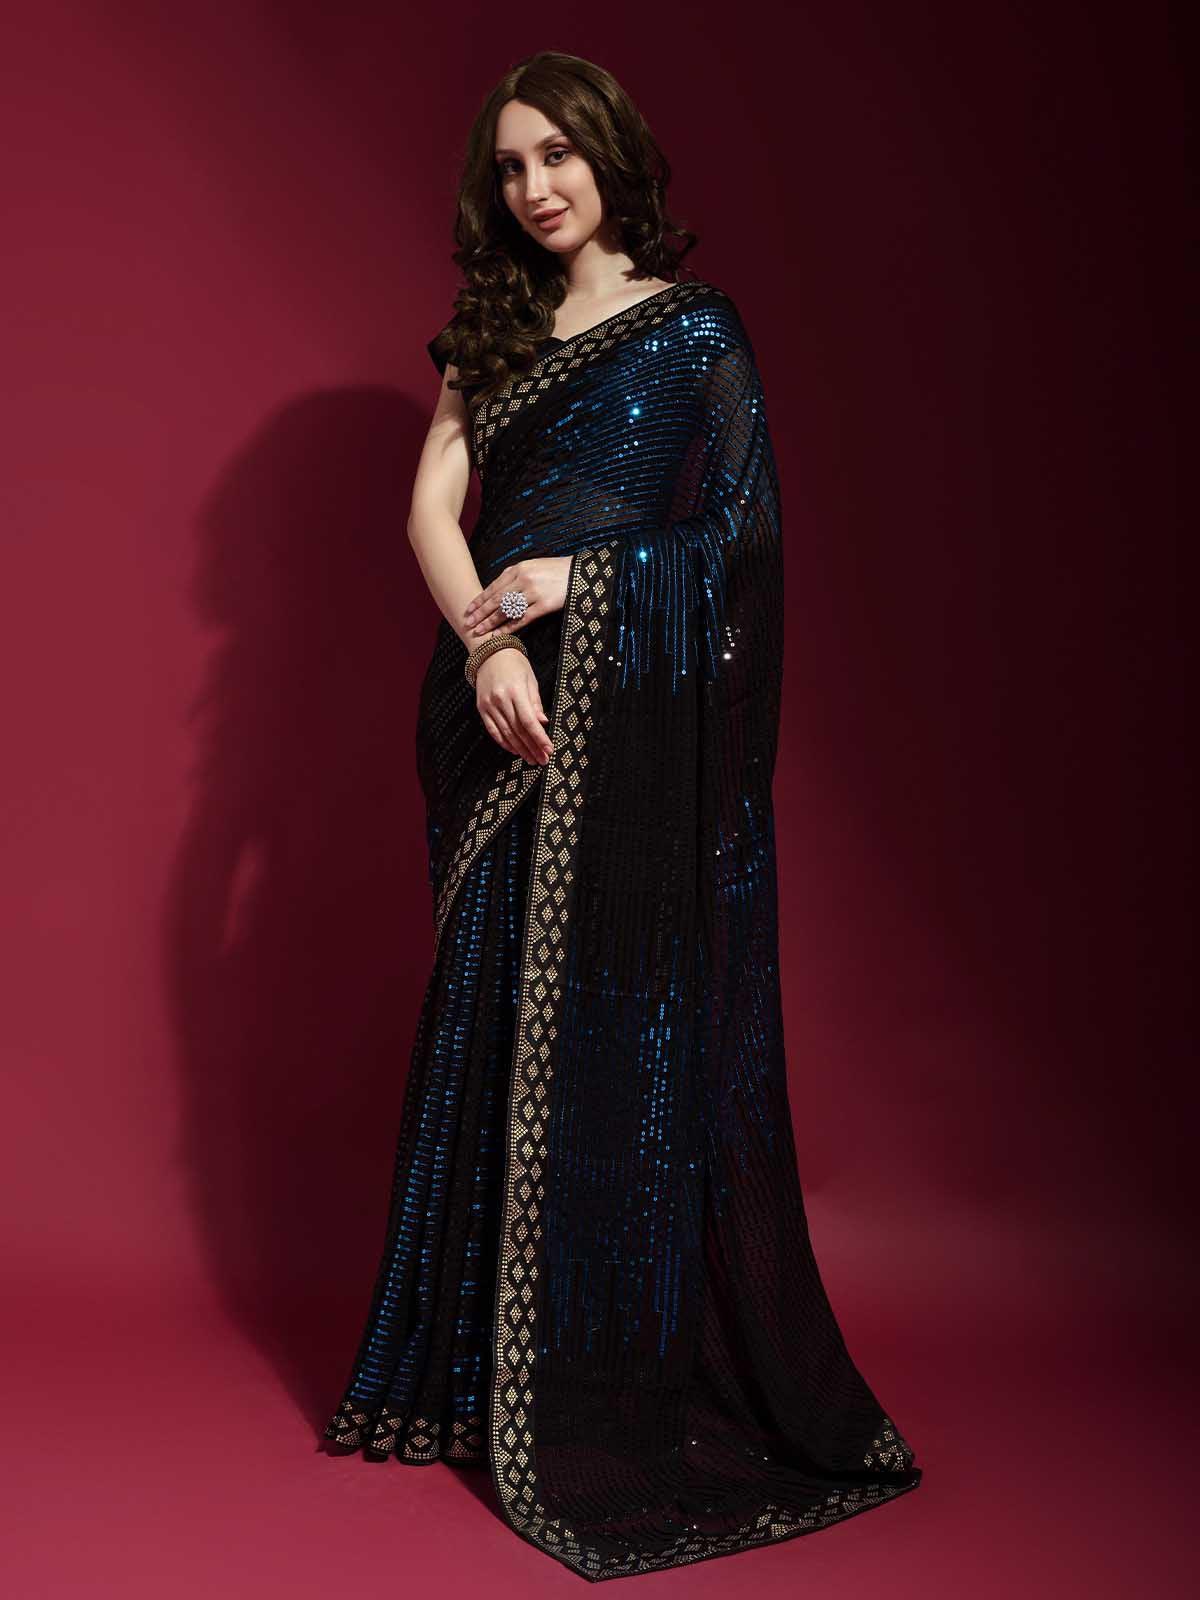 Indian Women Modern Saree Blouse Set Traditional Beautiful Ethnic Black  color | eBay